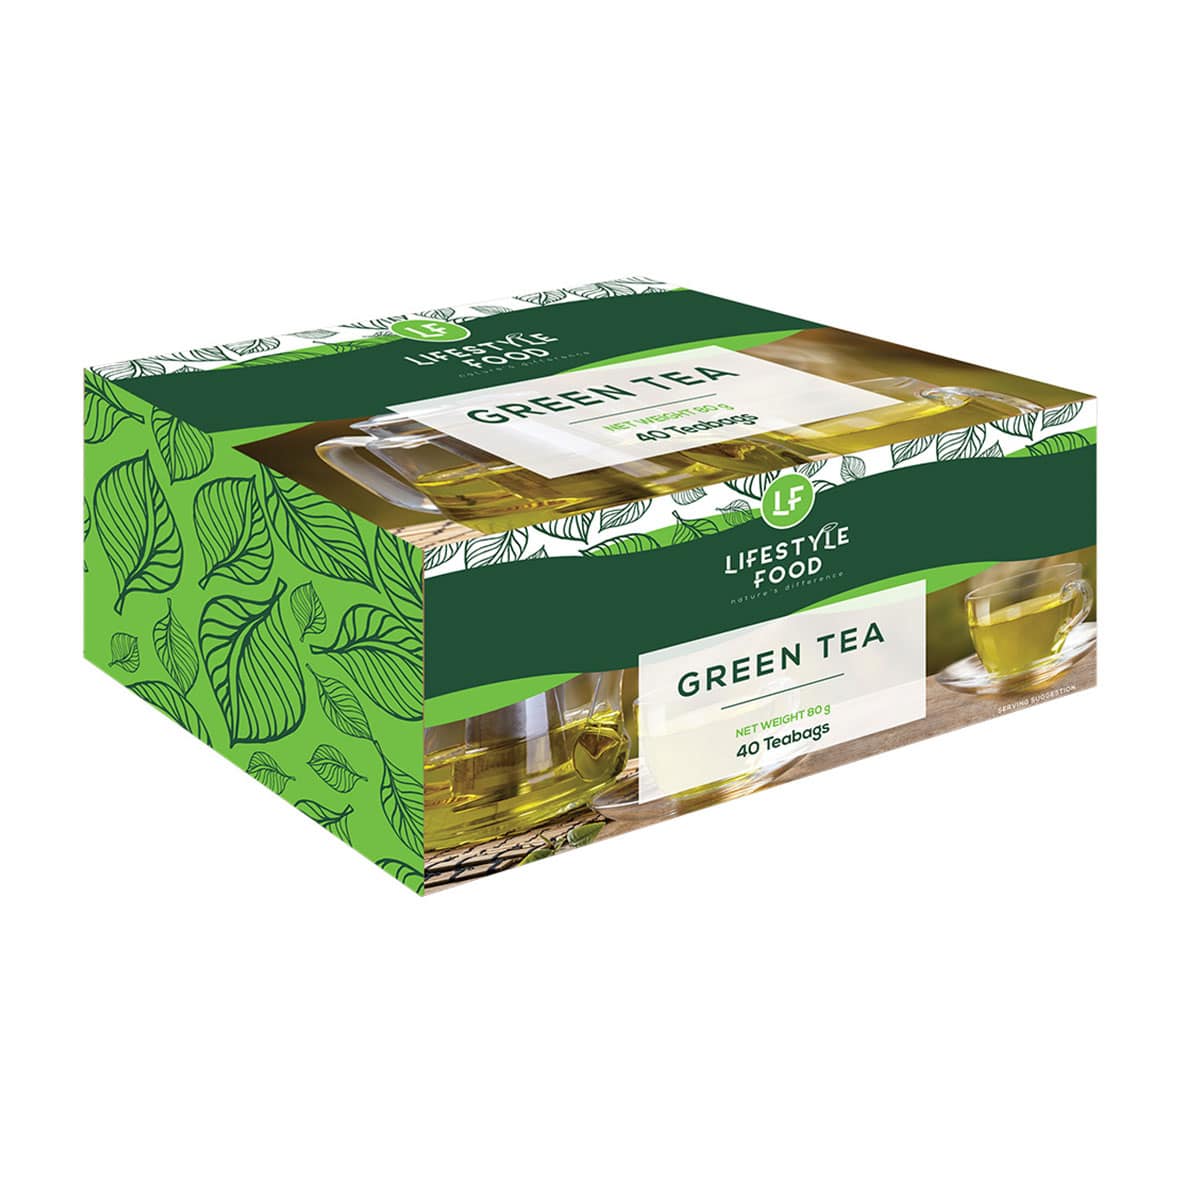 Lifestyle Food Green Tea Value Pack - 40 Teabags